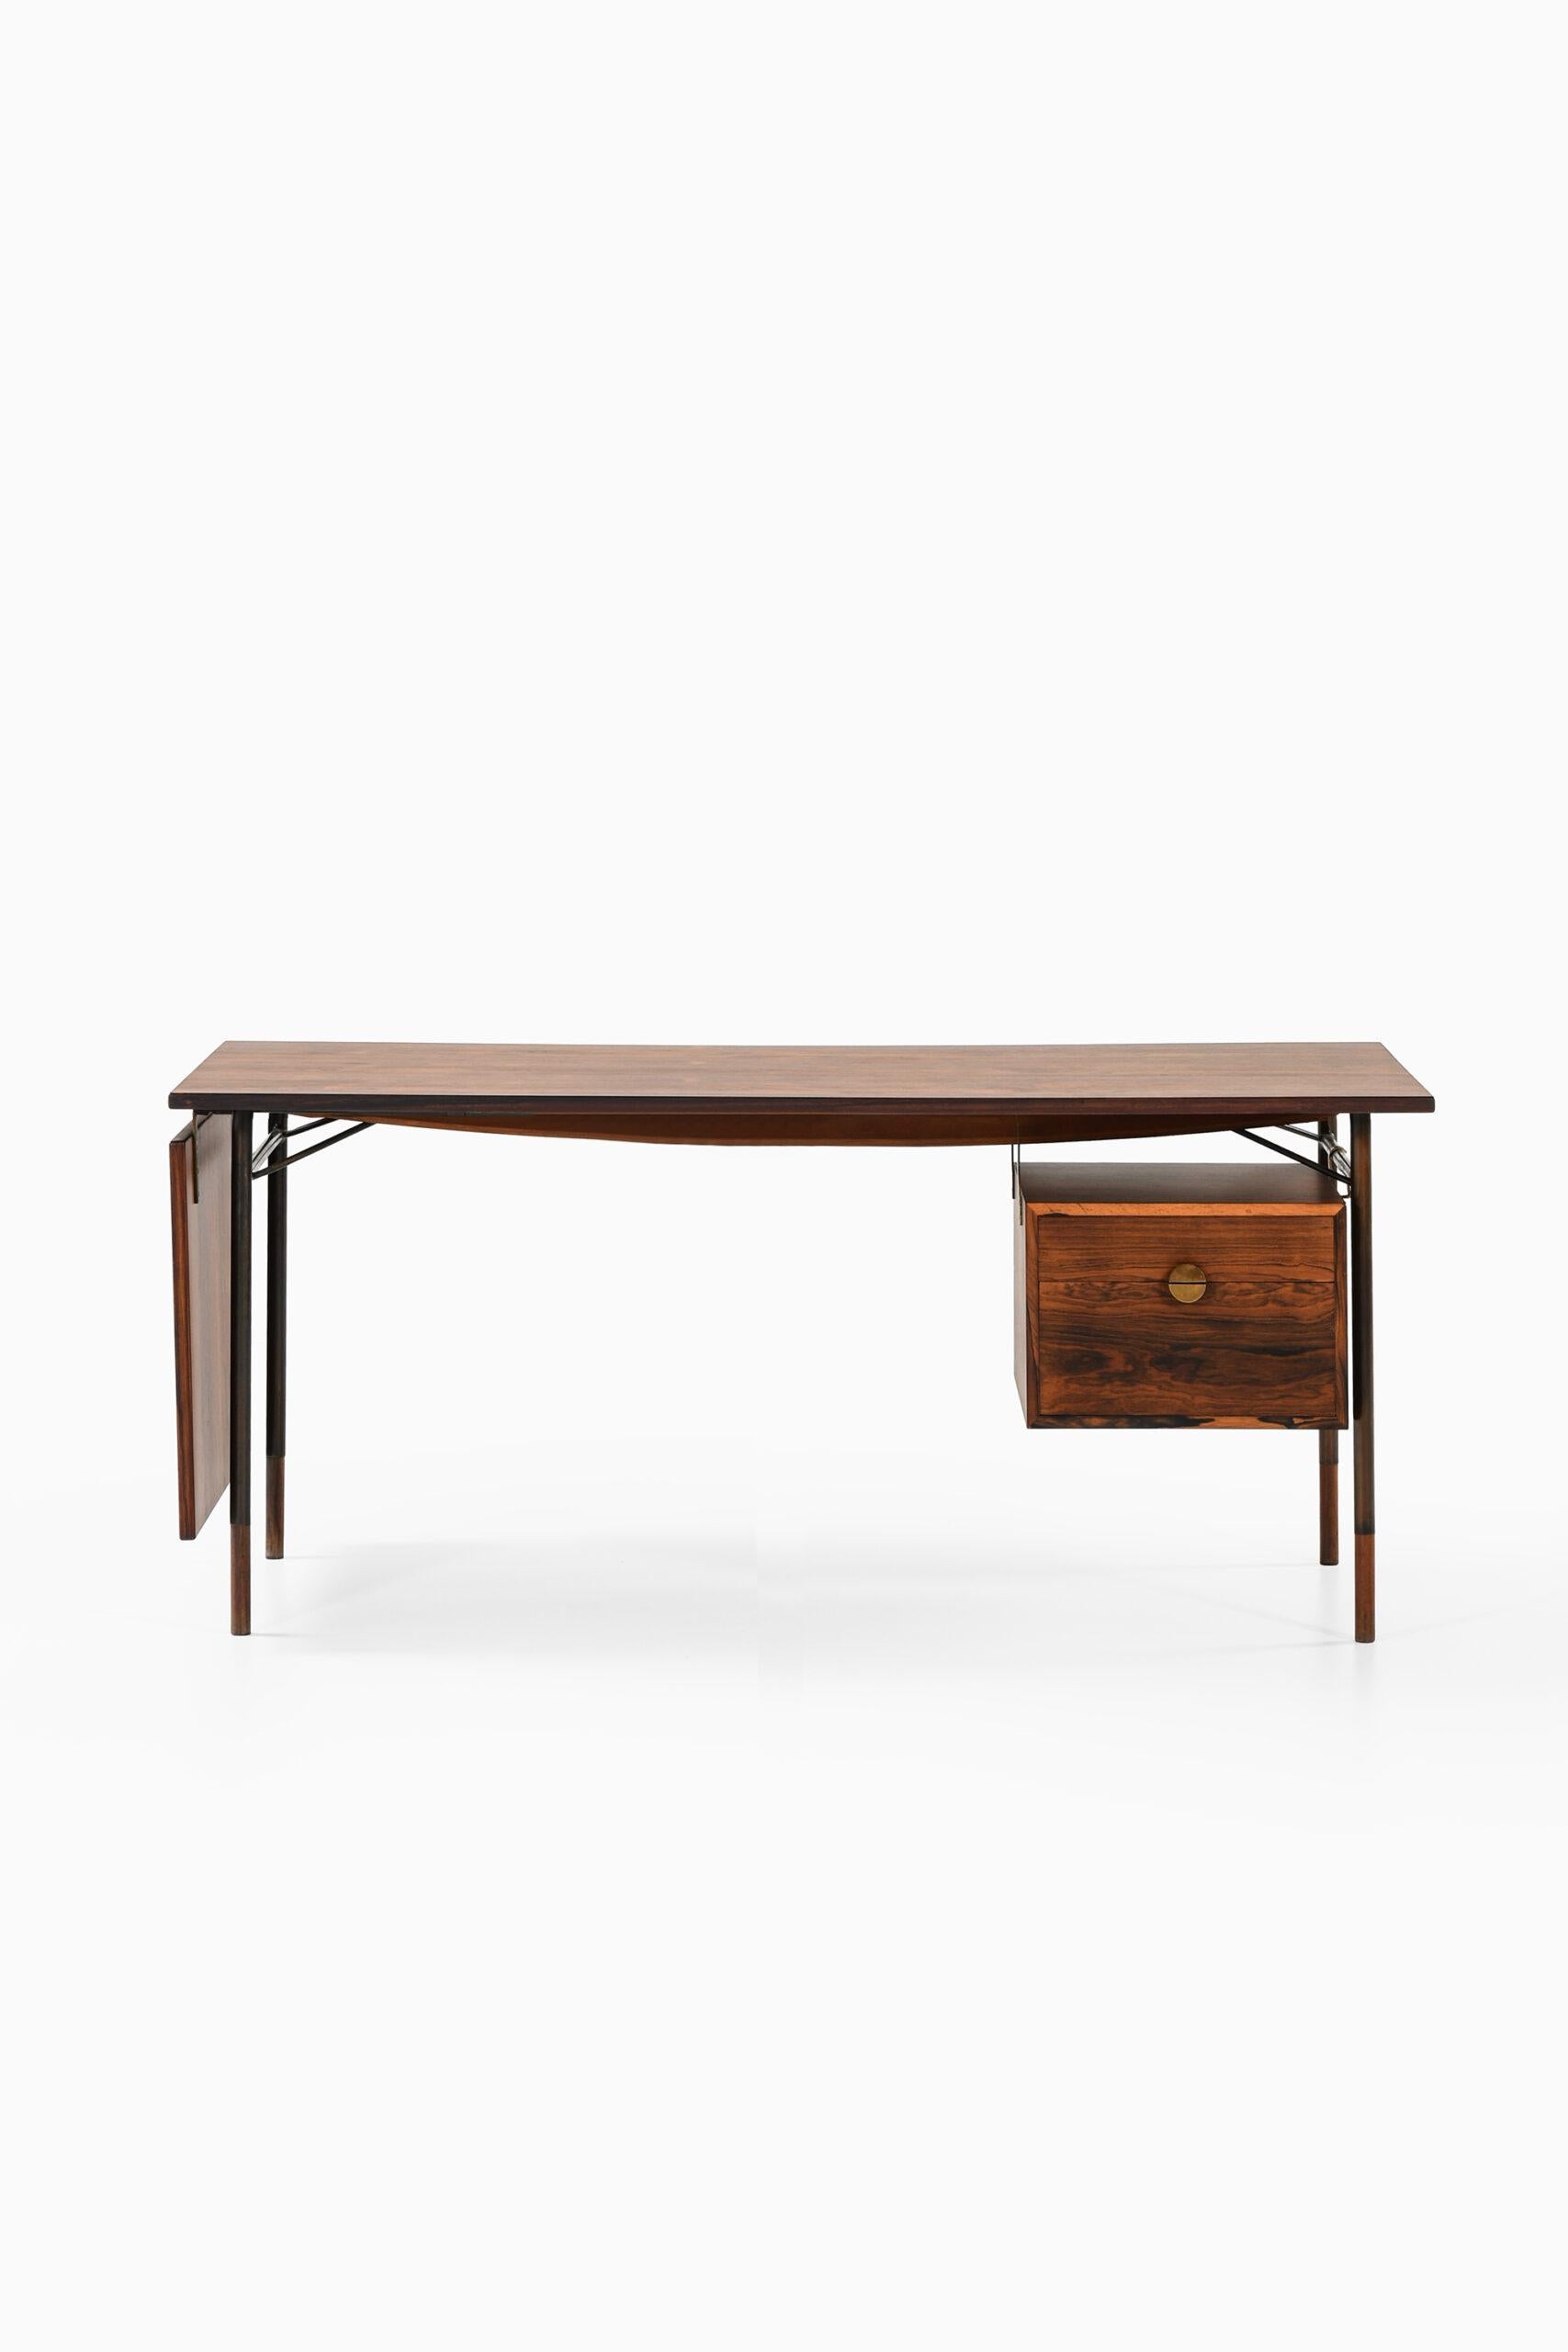 Rare freestanding desk model BO-69 designed by Finn Juhl. Produced by Bovirke in Denmark. Dimensions (W x D x H): 170 ( 223 ) x 85 x 73 cm.